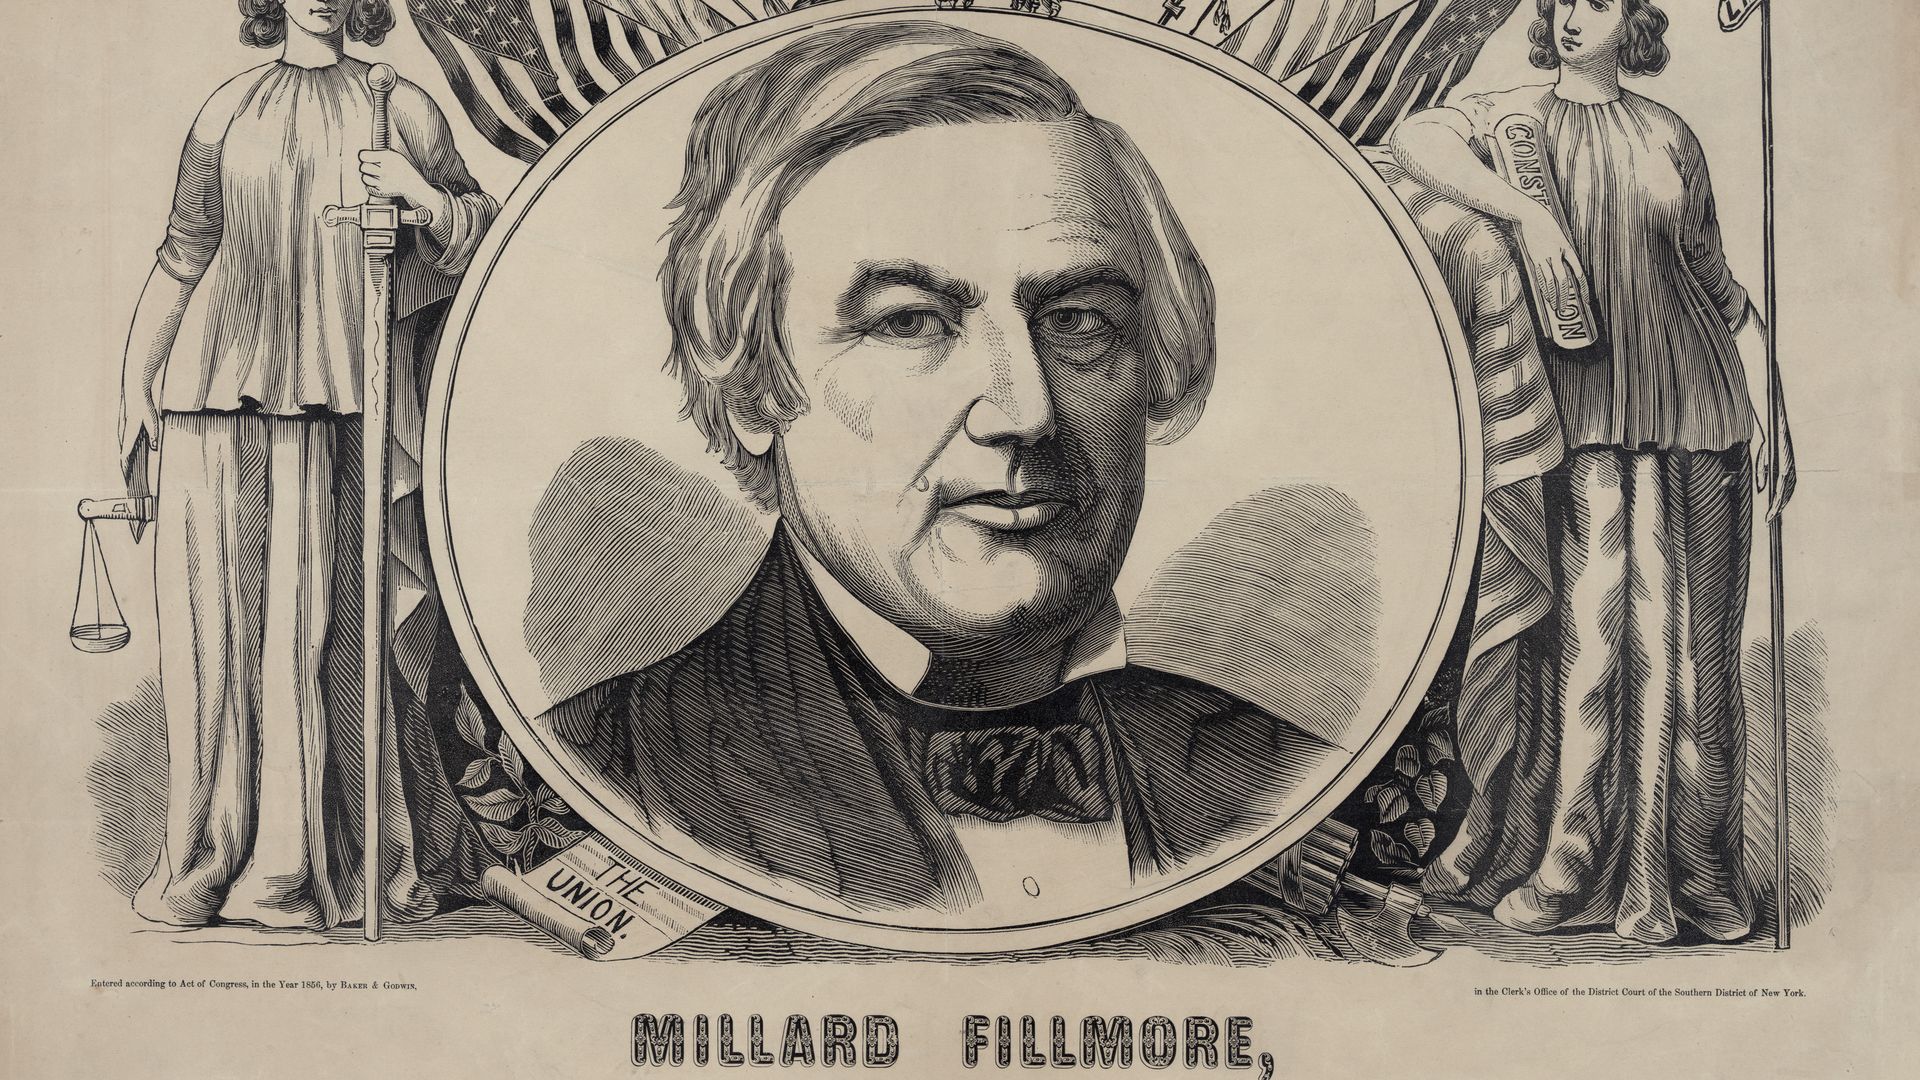 Millard Fillmore portrait